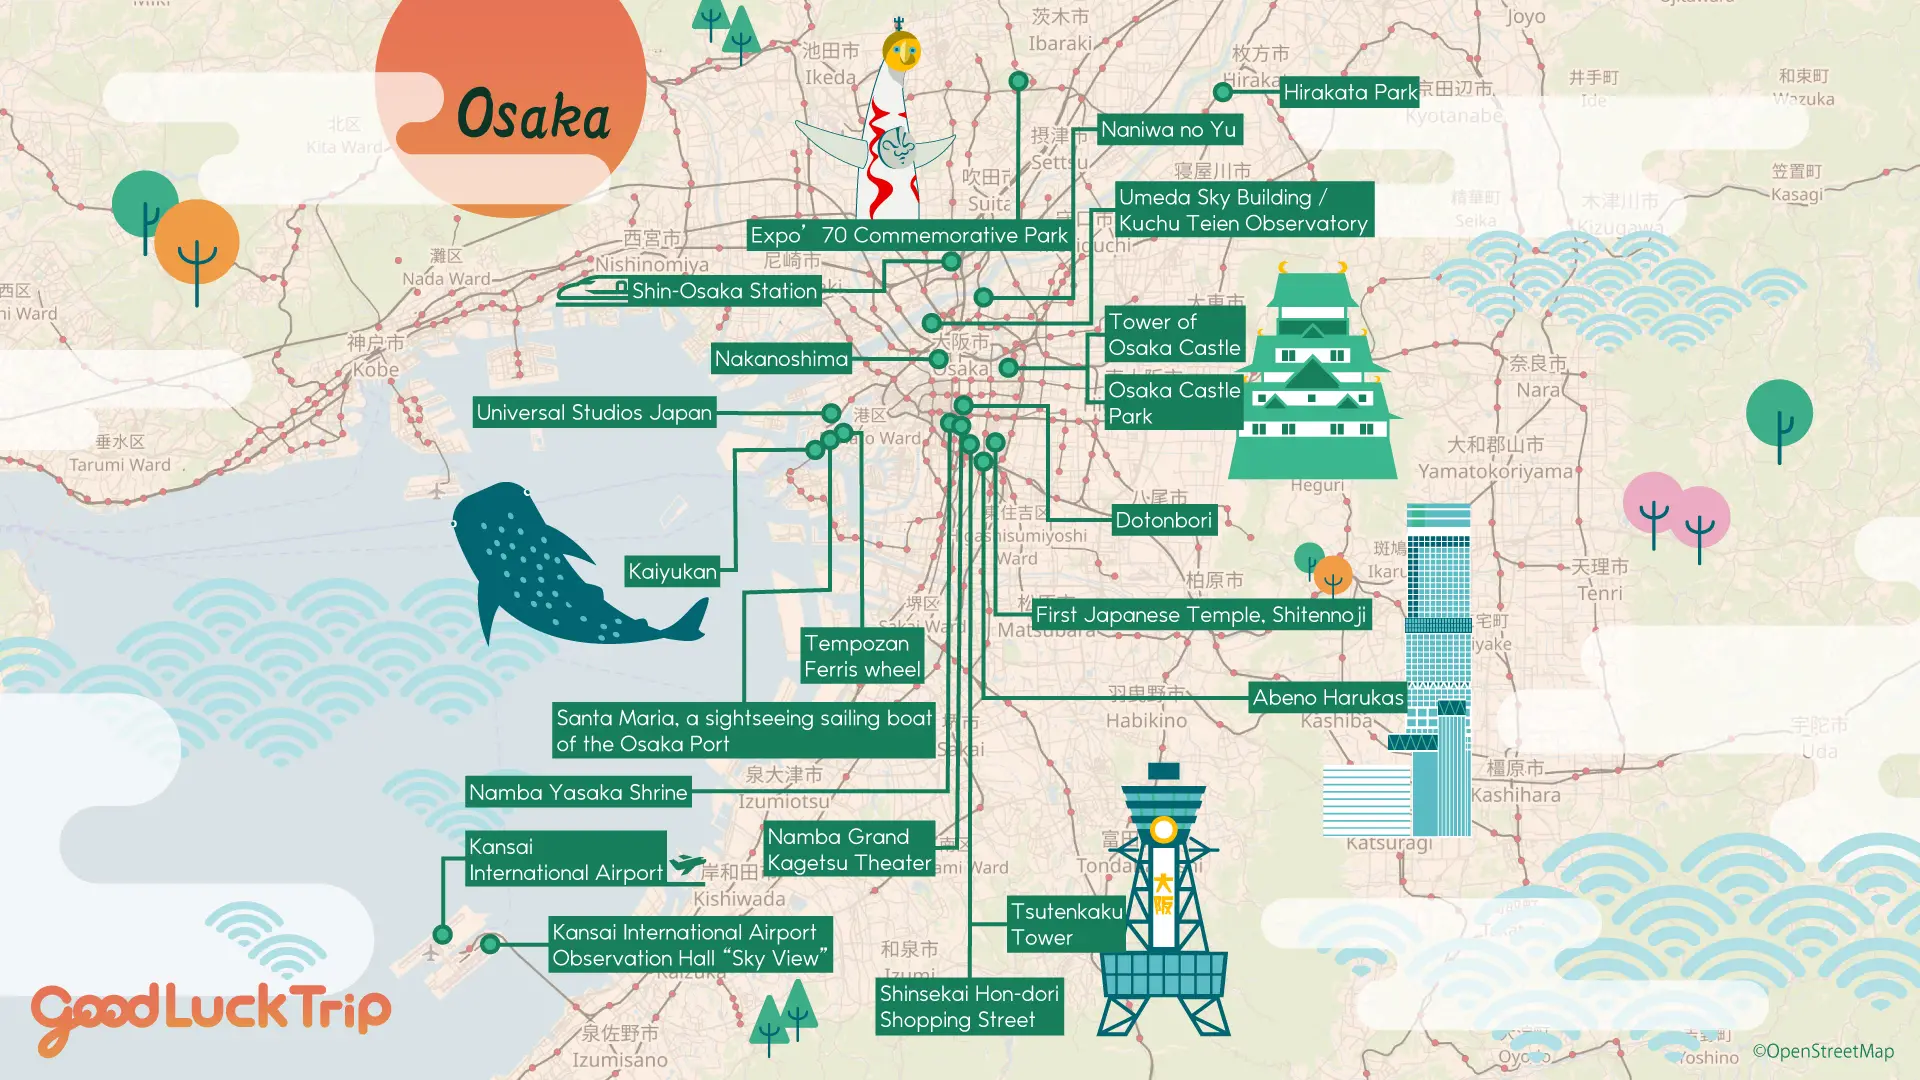 Osaka’s hot tourist spots